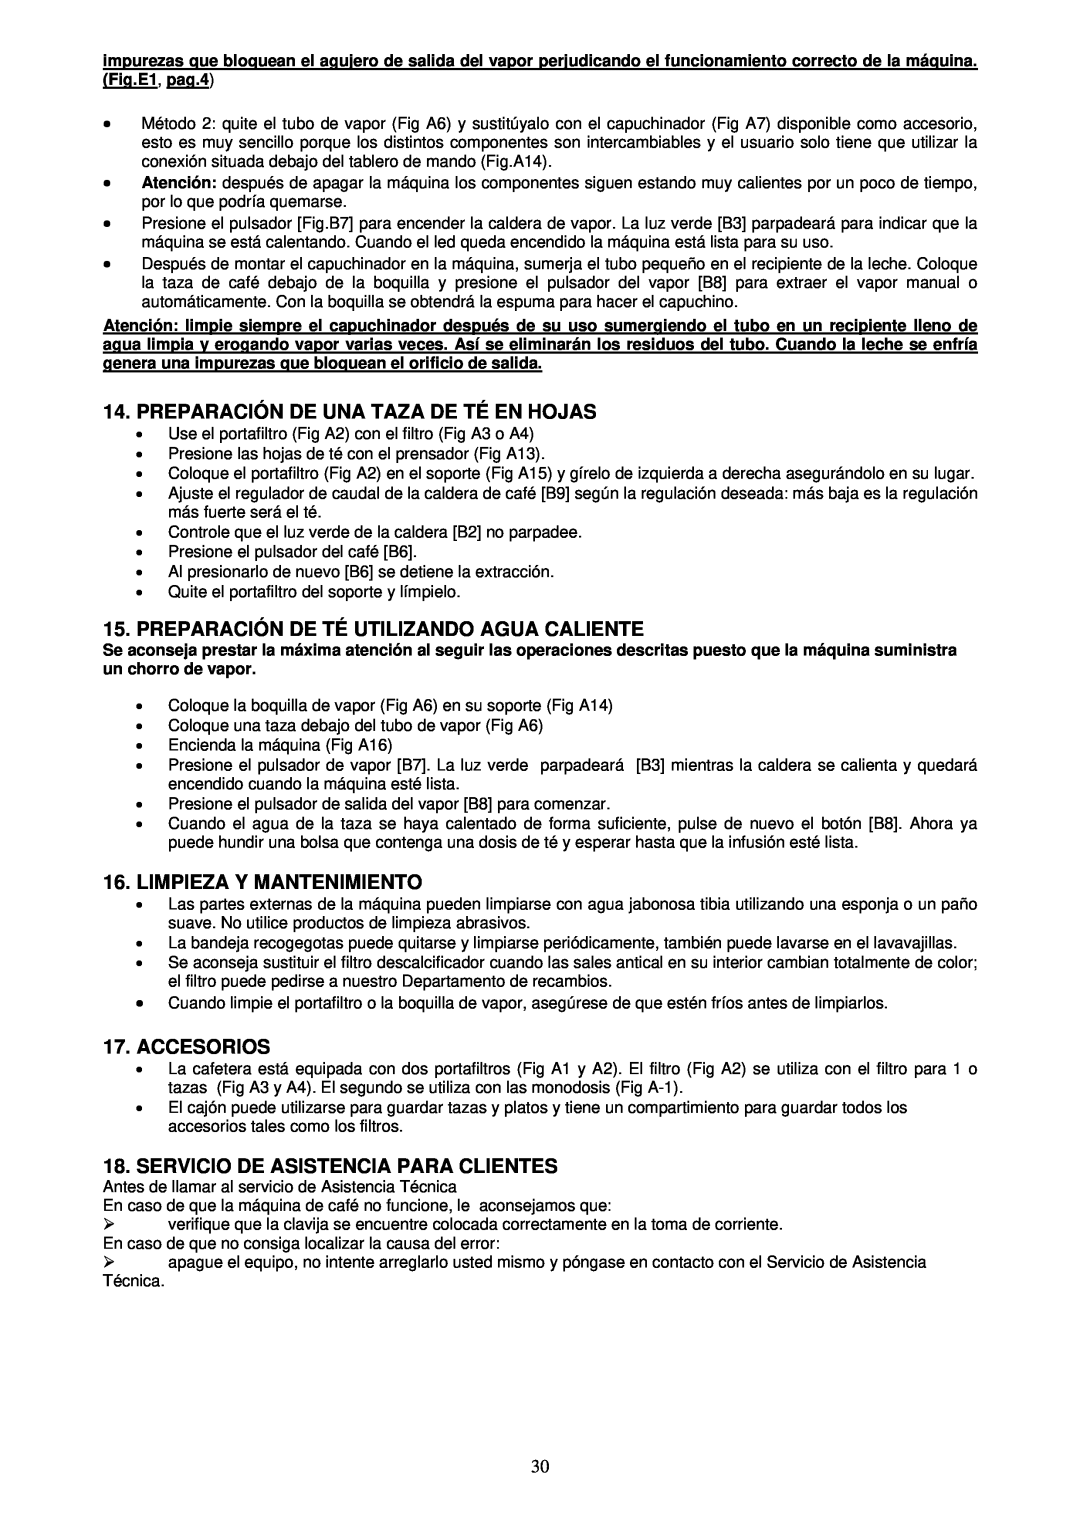 Candy BMC 60 X user manual Preparación De Una Taza De Té En Hojas, Preparación De Té Utilizando Agua Caliente, Accesorios 